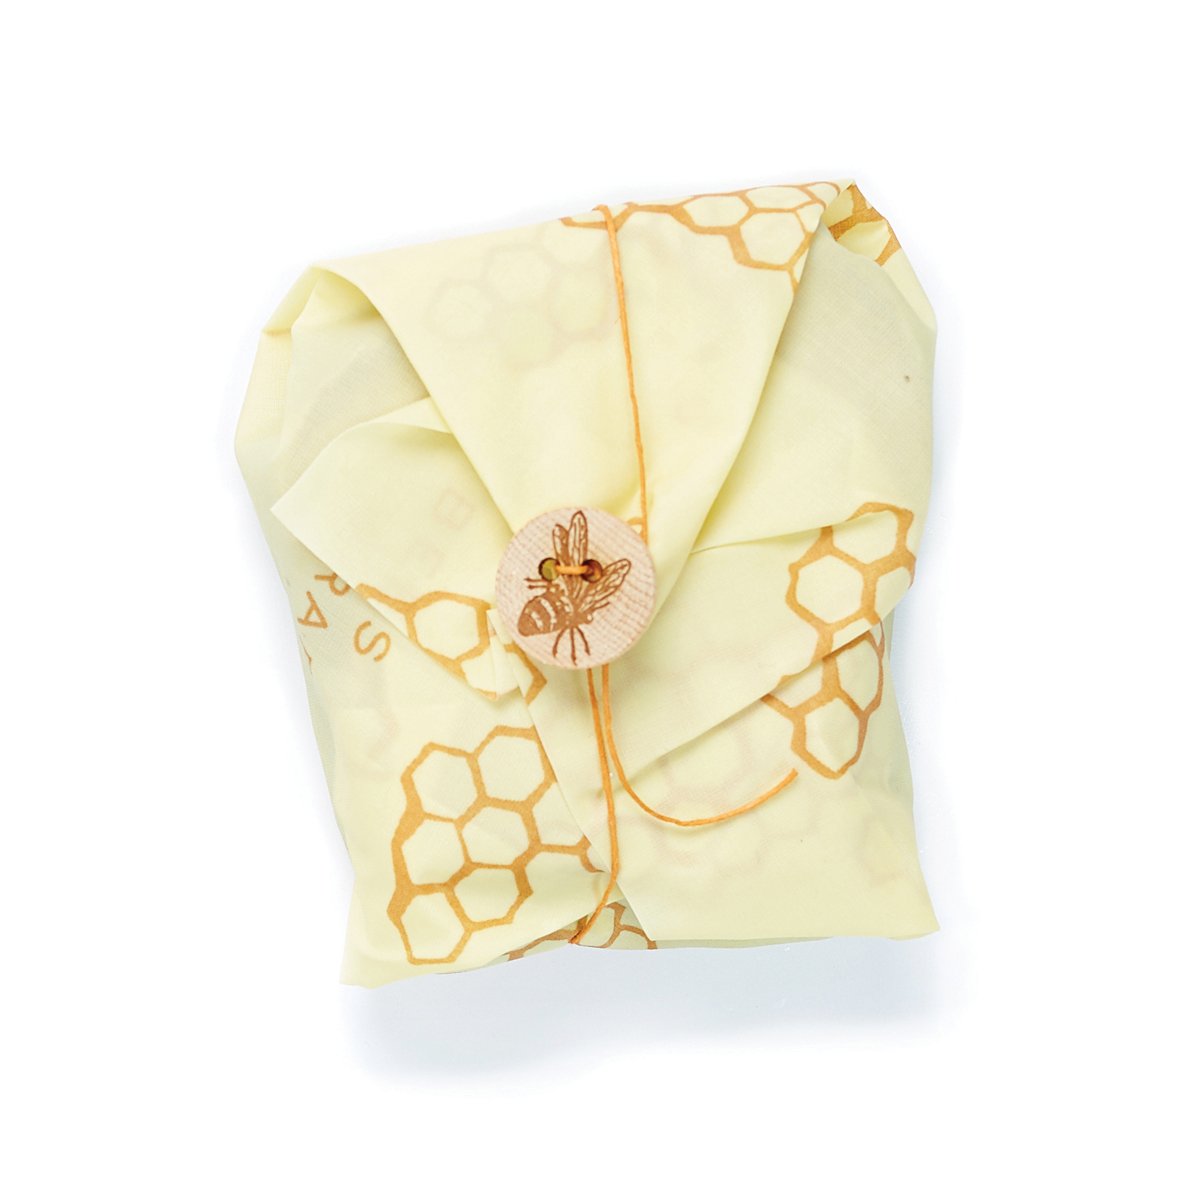 Buy Bee's Wrap - Swedish Dishcloths - 3 Pack Online